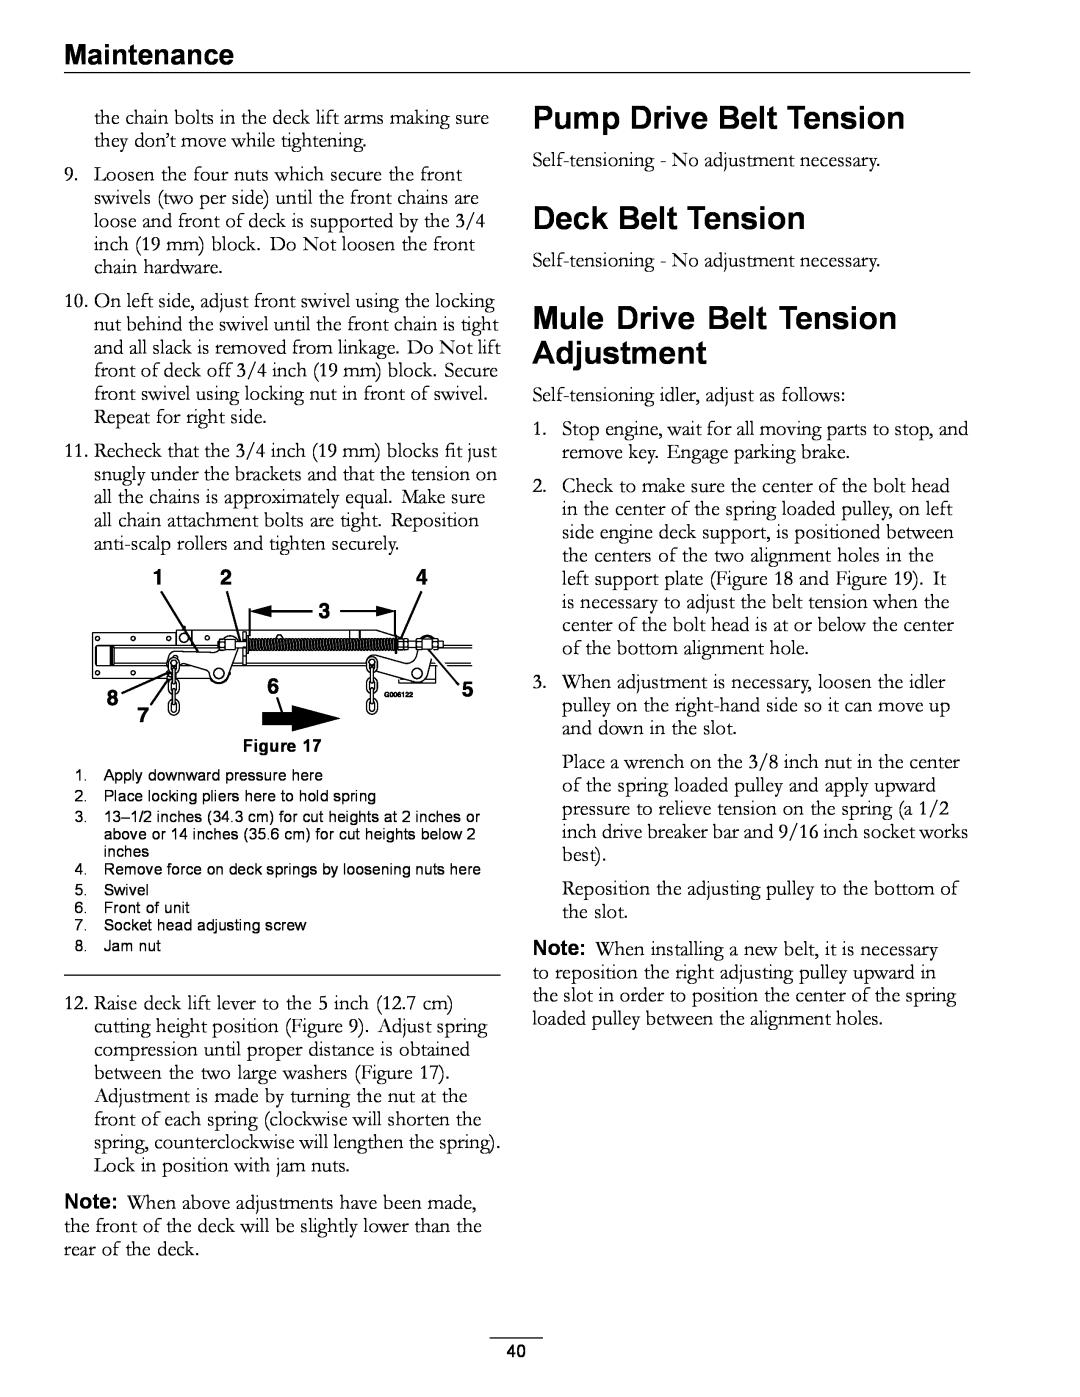 Exmark 920 manual Pump Drive Belt Tension, Deck Belt Tension, Mule Drive Belt Tension Adjustment, Maintenance 